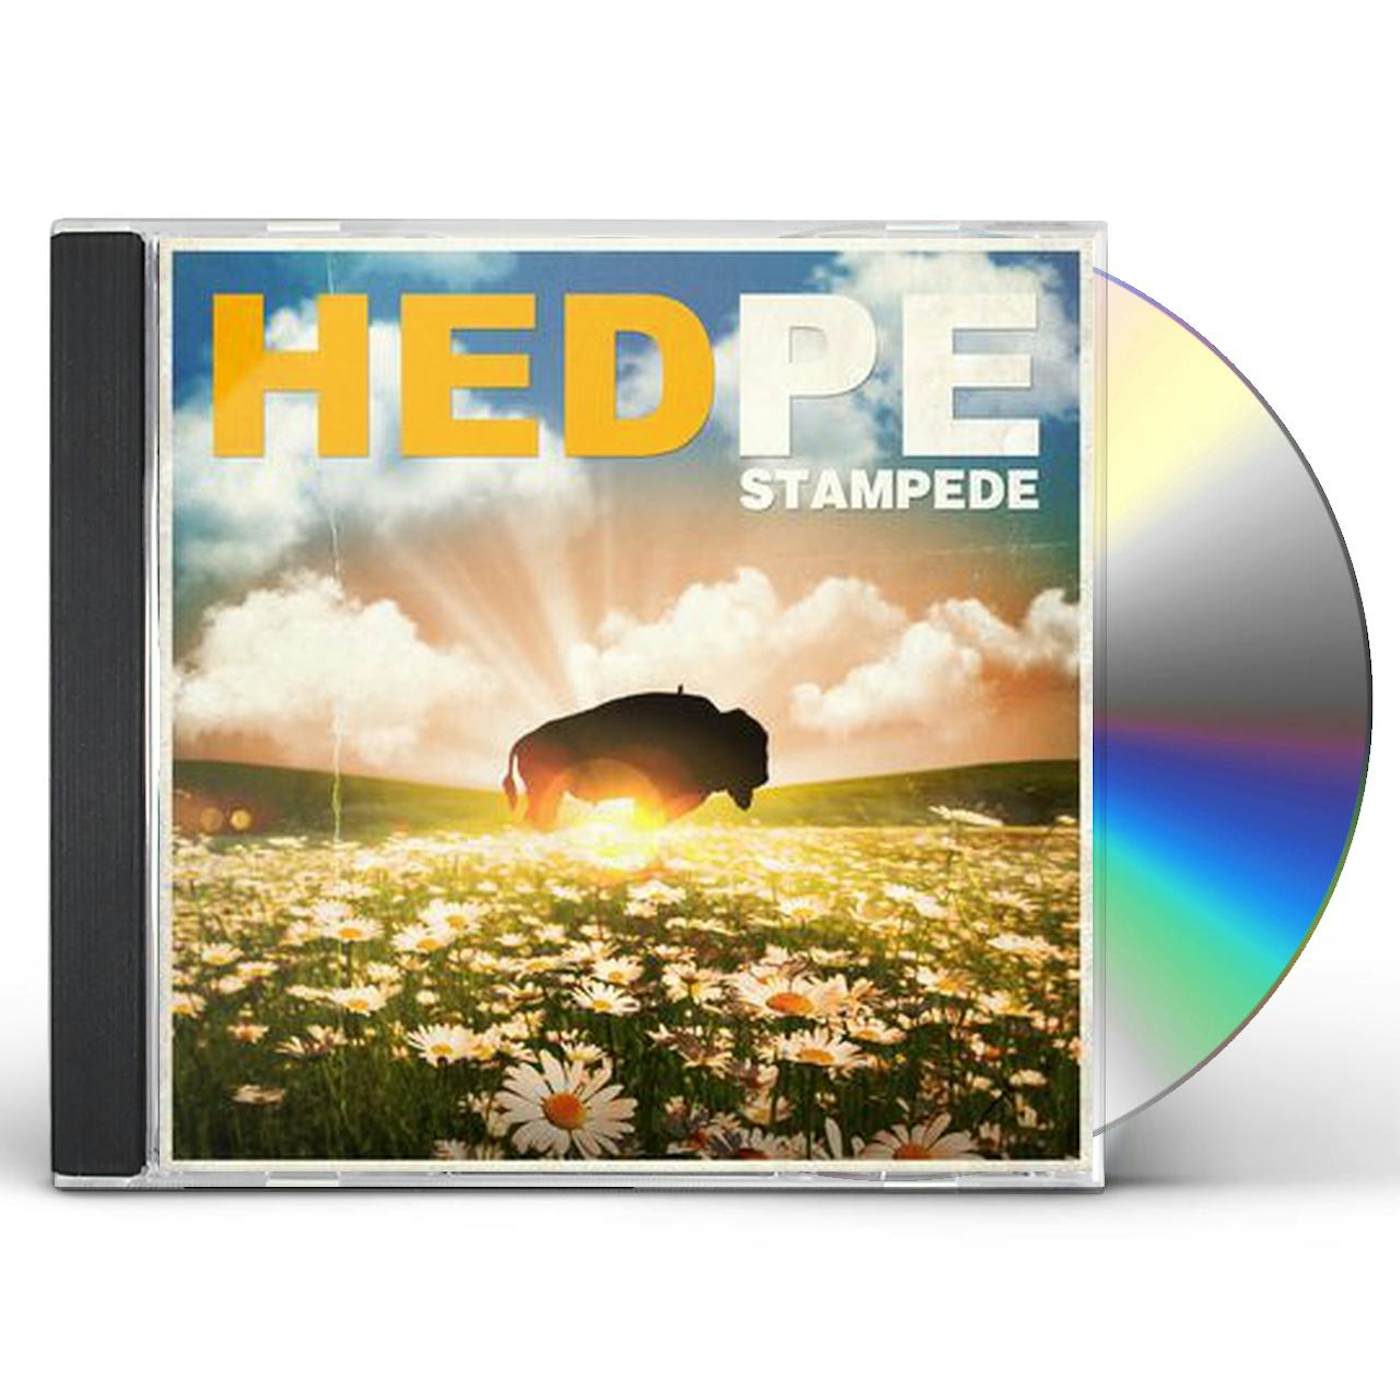 P.E. STAMPEDE CD